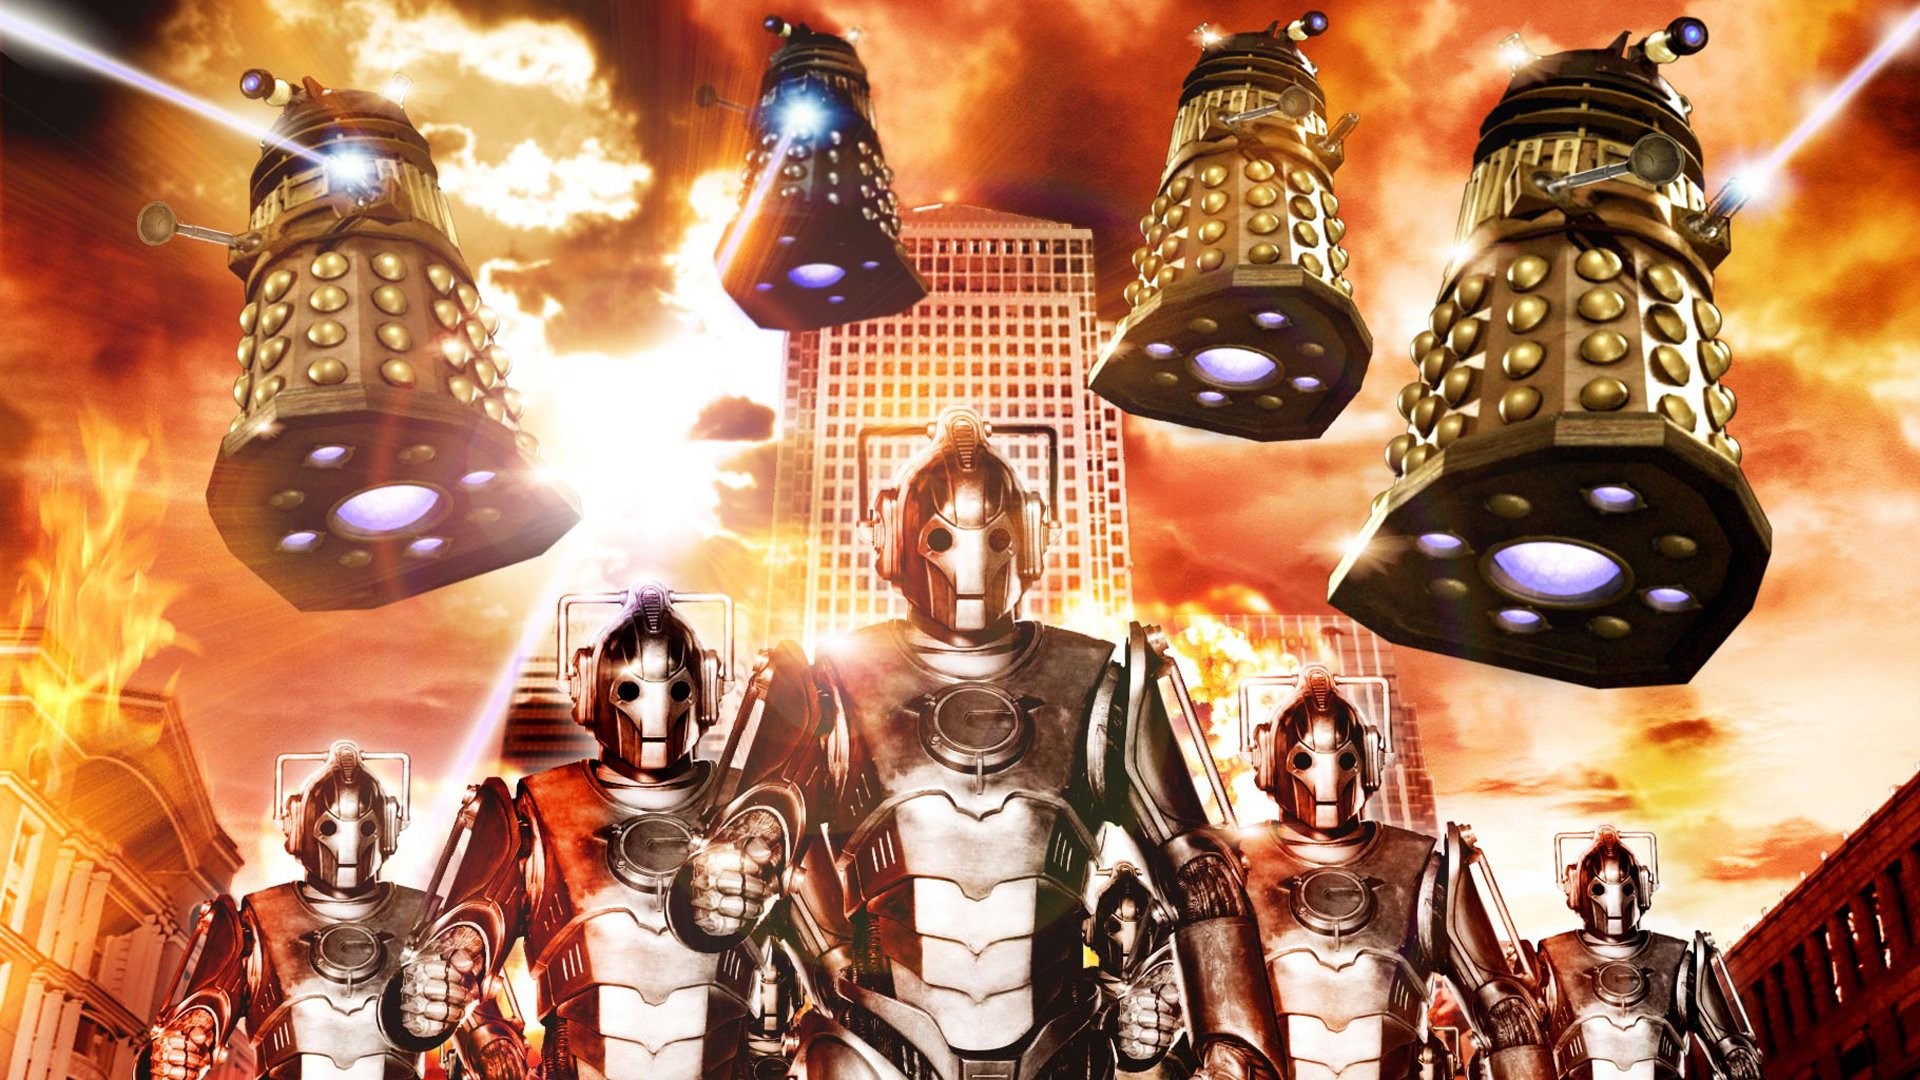 1920x1080 TV Show - Doctor Who Dalek Cyberman (Doctor Who) Wallpaper